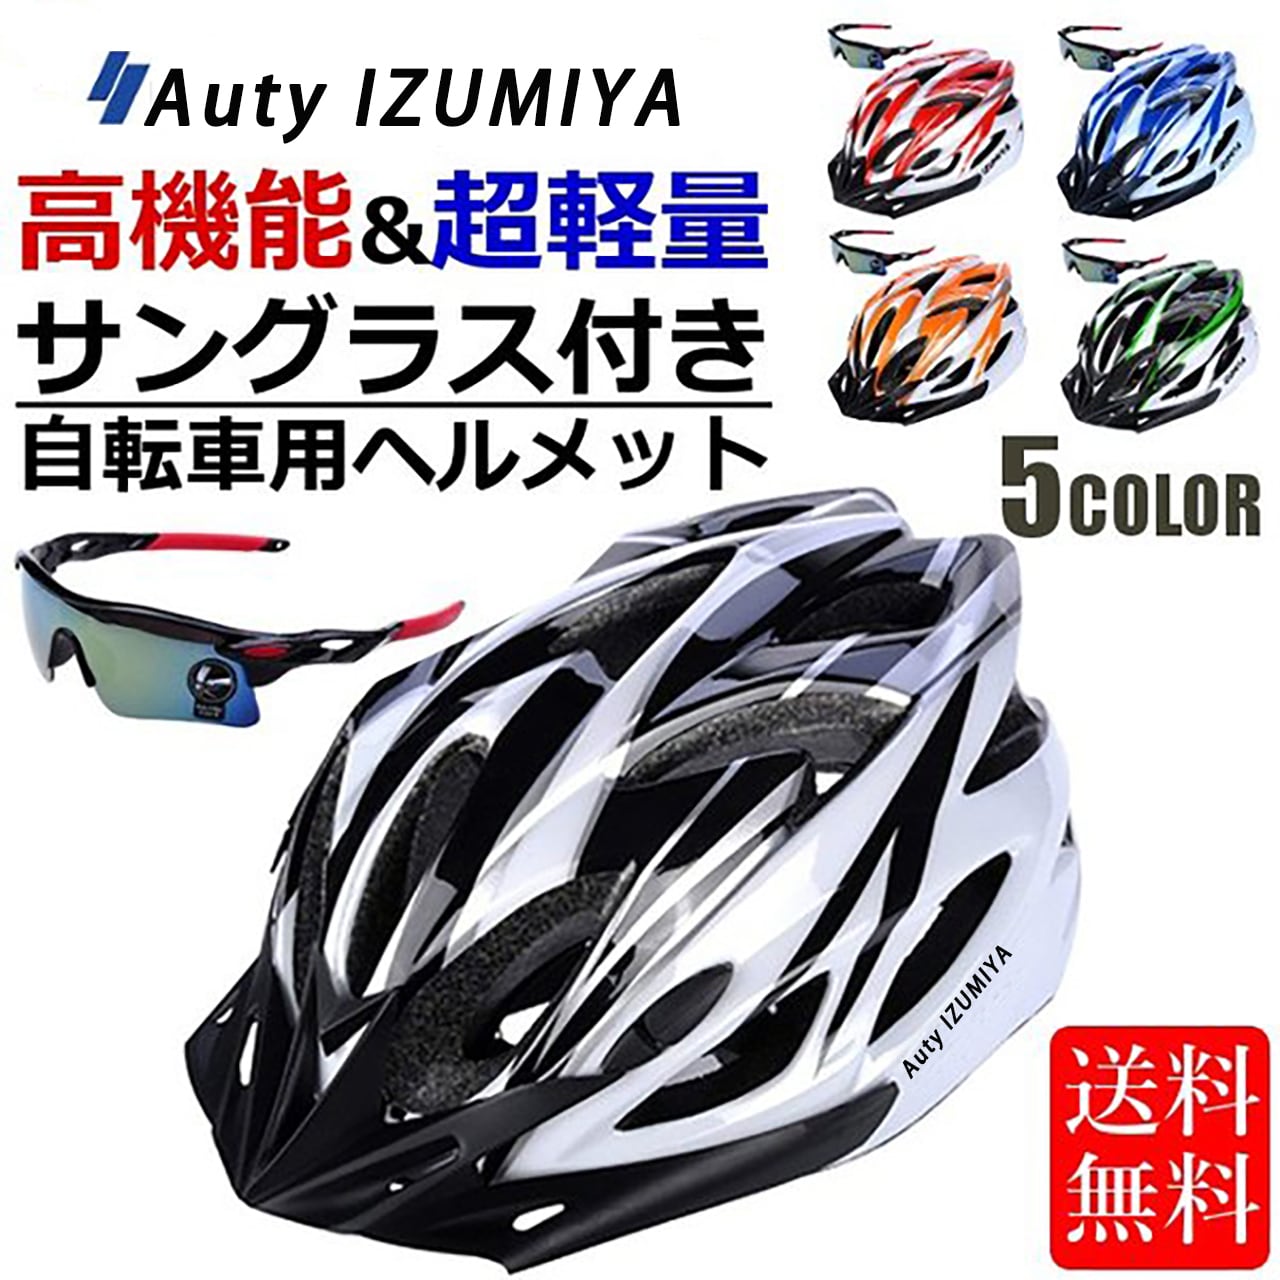 Auty IZUMIYA 自転車 ヘルメット ロードバイク クロスバイク サイクリング 大人 超軽量 高剛性 大人用 サングラス セット Auty  IZUMIYA